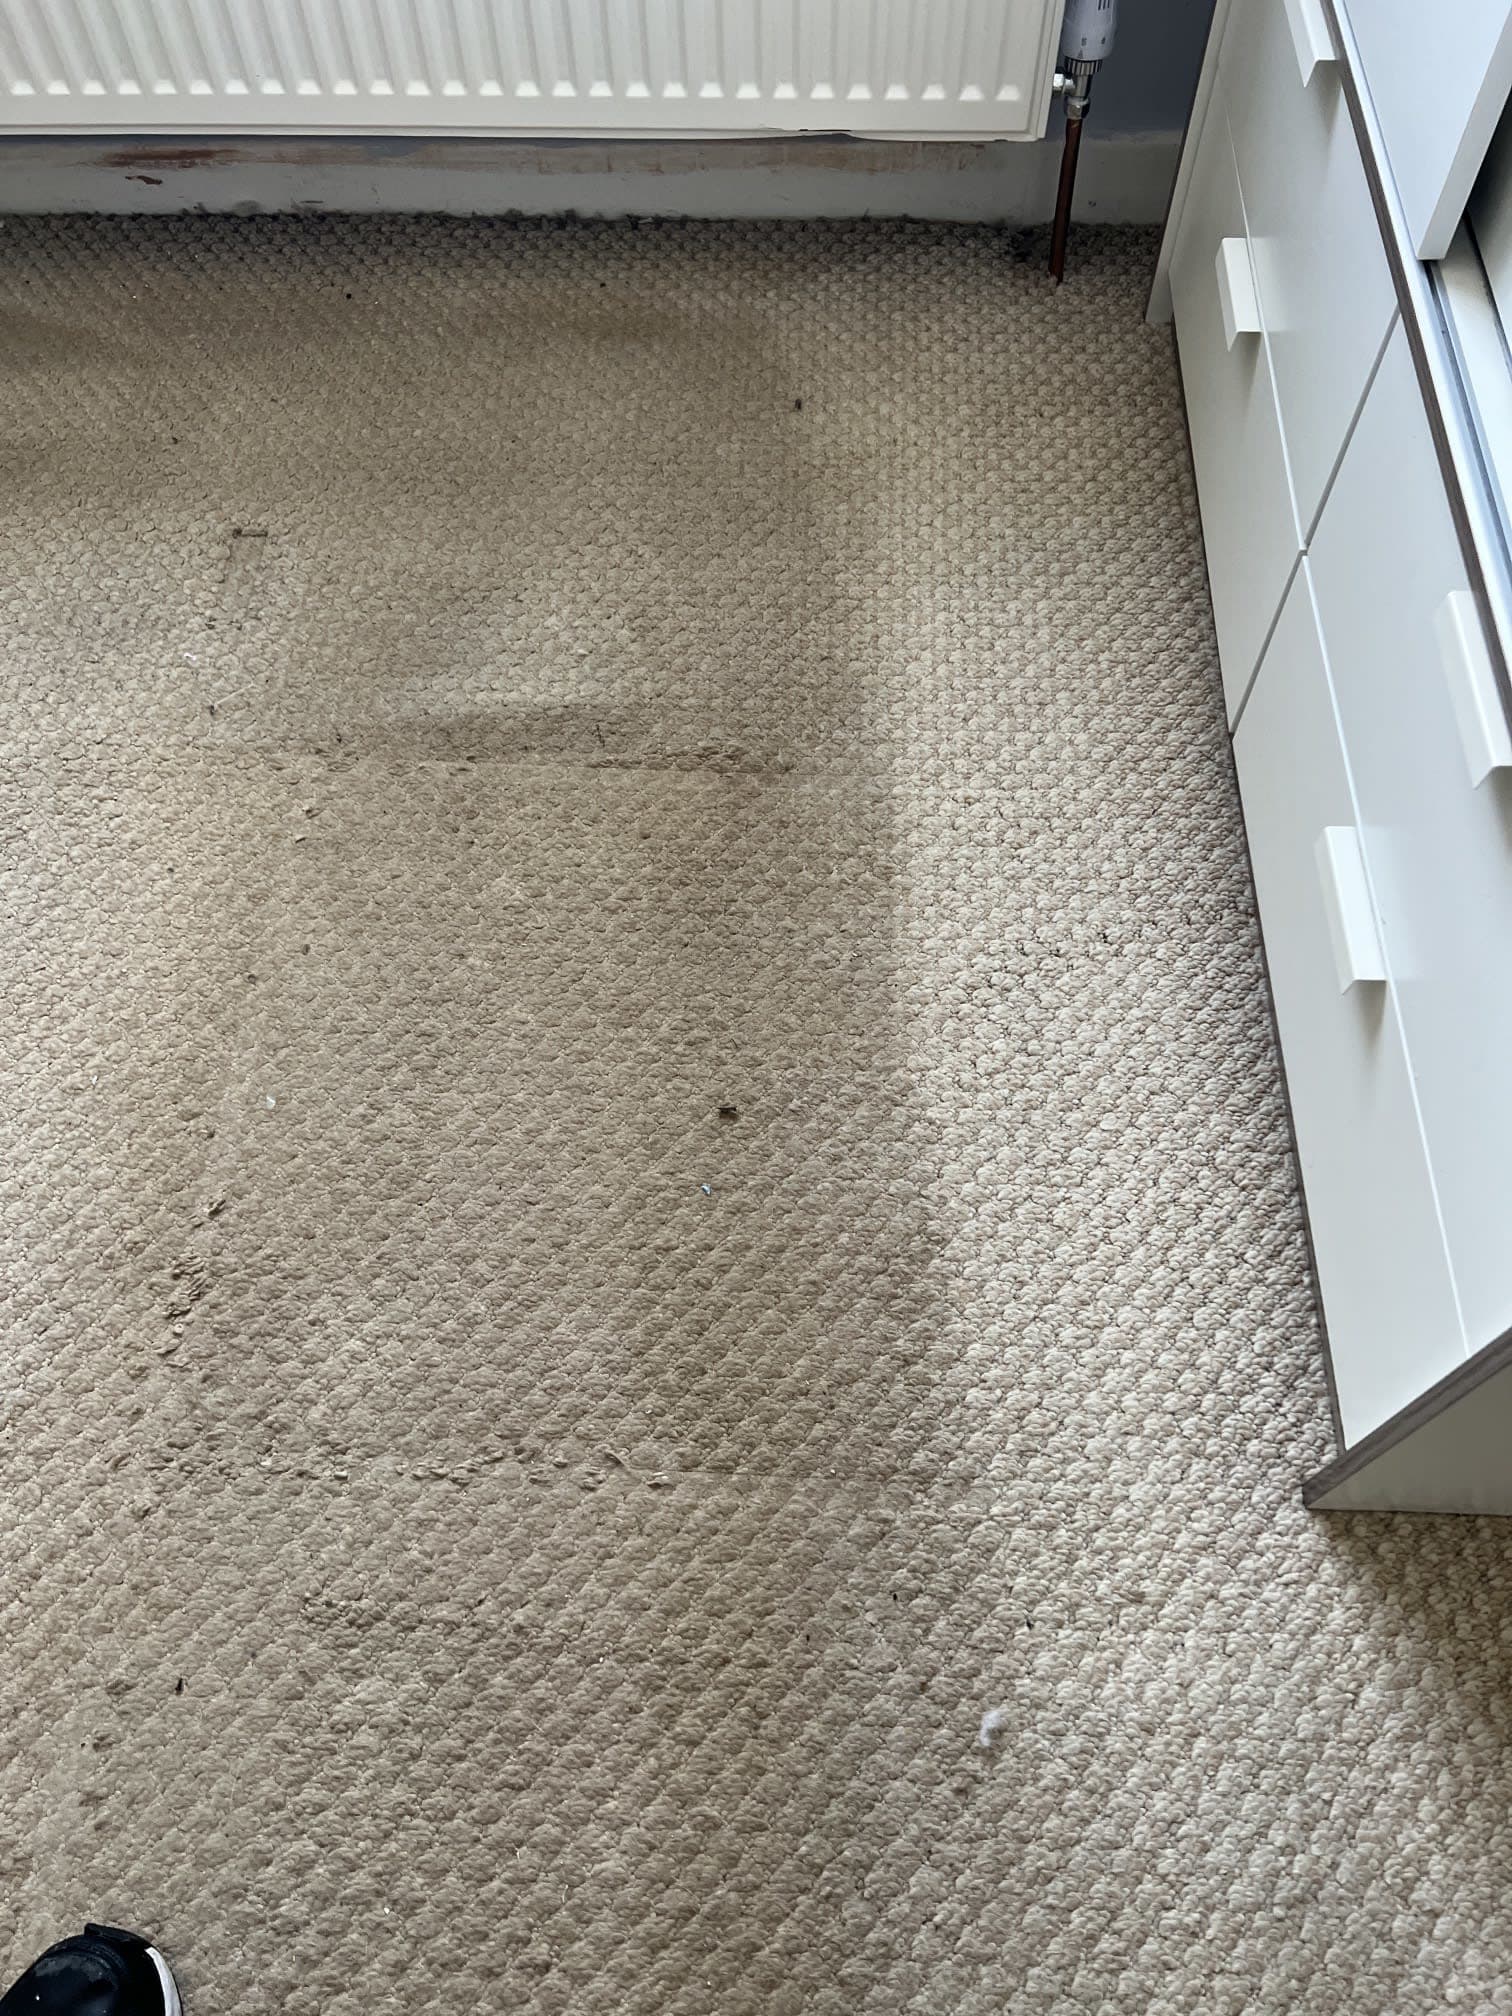 Dedu's Carpet Cleaning Huddersfield 07407 200148